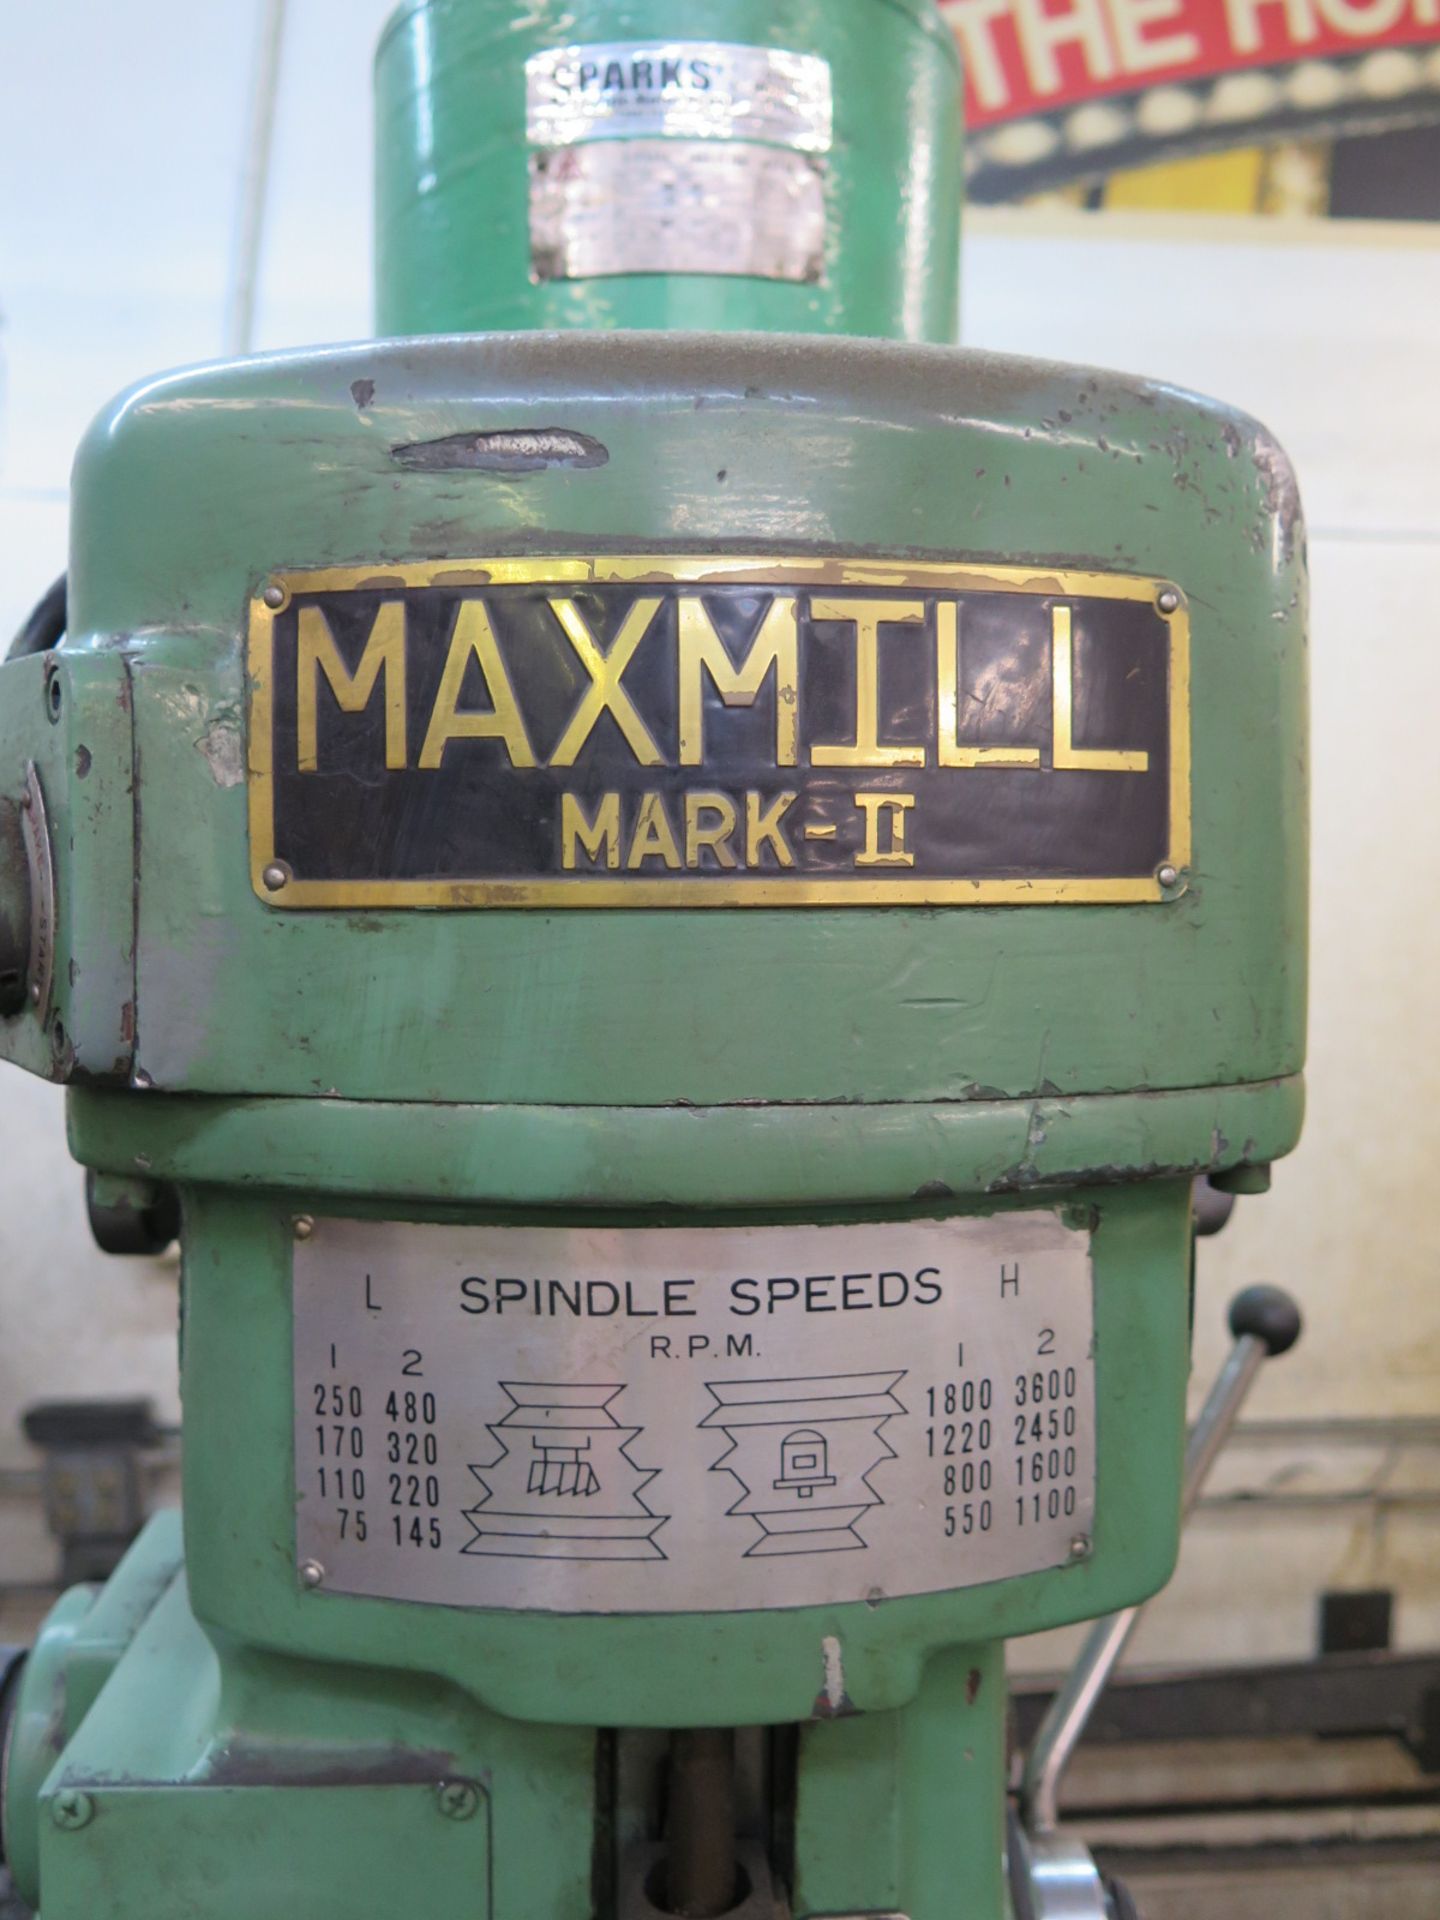 MaxMIll mdl. YC-2G Mark-II Universal Power Mill s/n 03498 w/ NTMB-40 Vertical and Horizontal - Image 3 of 7